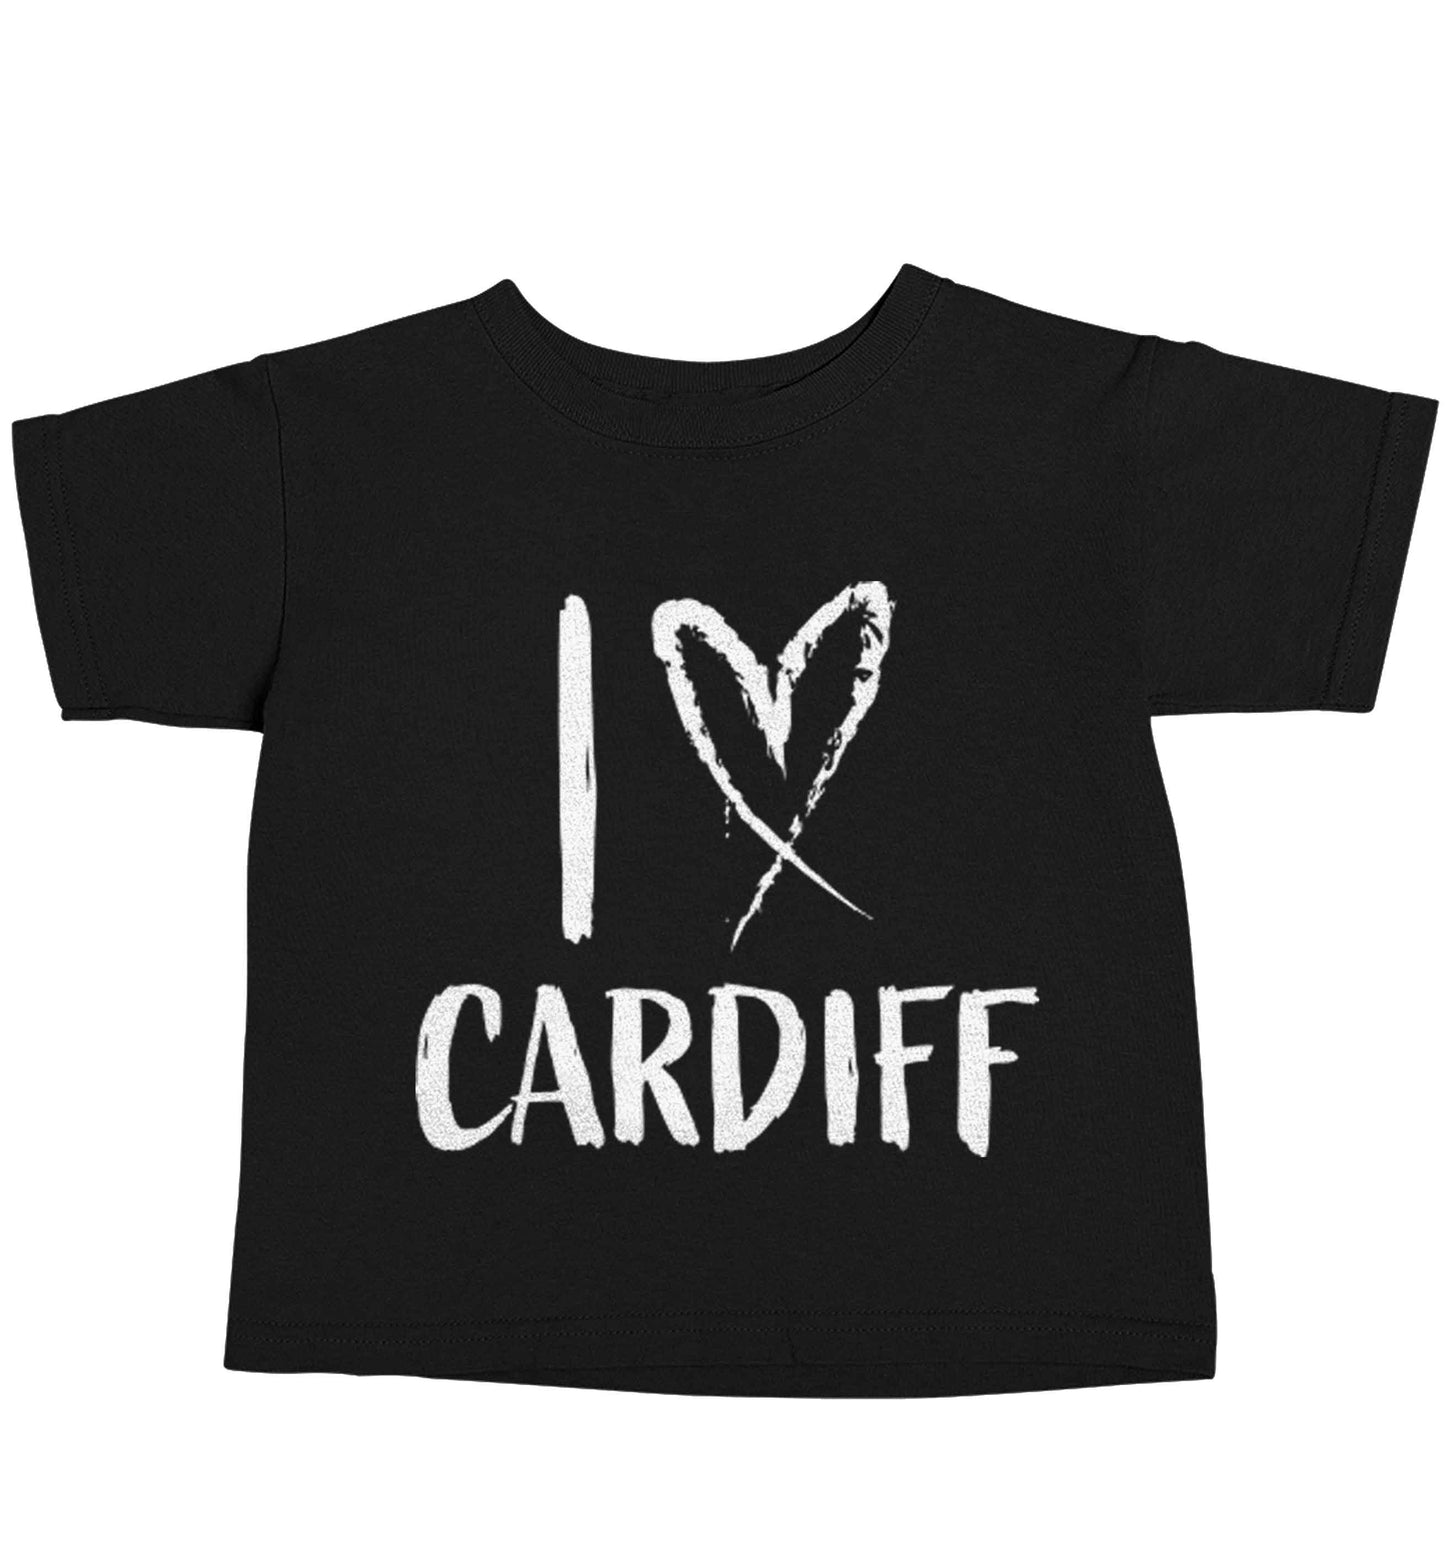 I love Cardiff Black baby toddler Tshirt 2 years